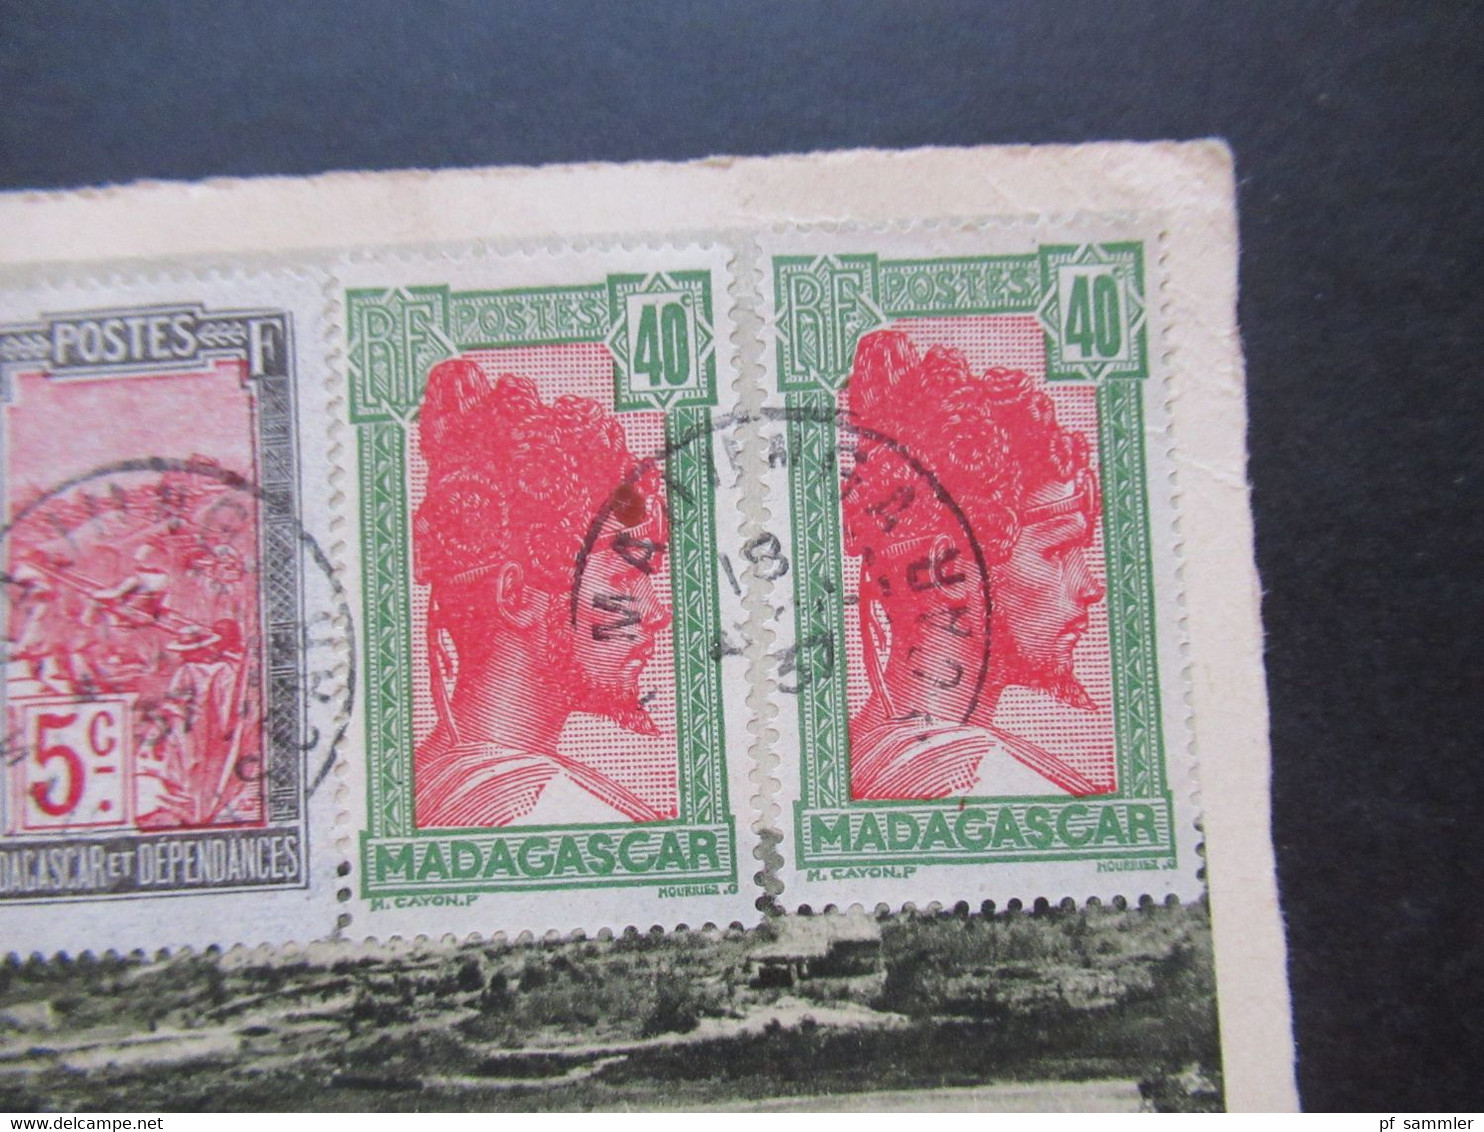 AK 1937 Madagaskar Majunga La Digue Metzinger Bildseitig Frankiert Madagascar Et Dependances PK Nach Hildesheim - Covers & Documents